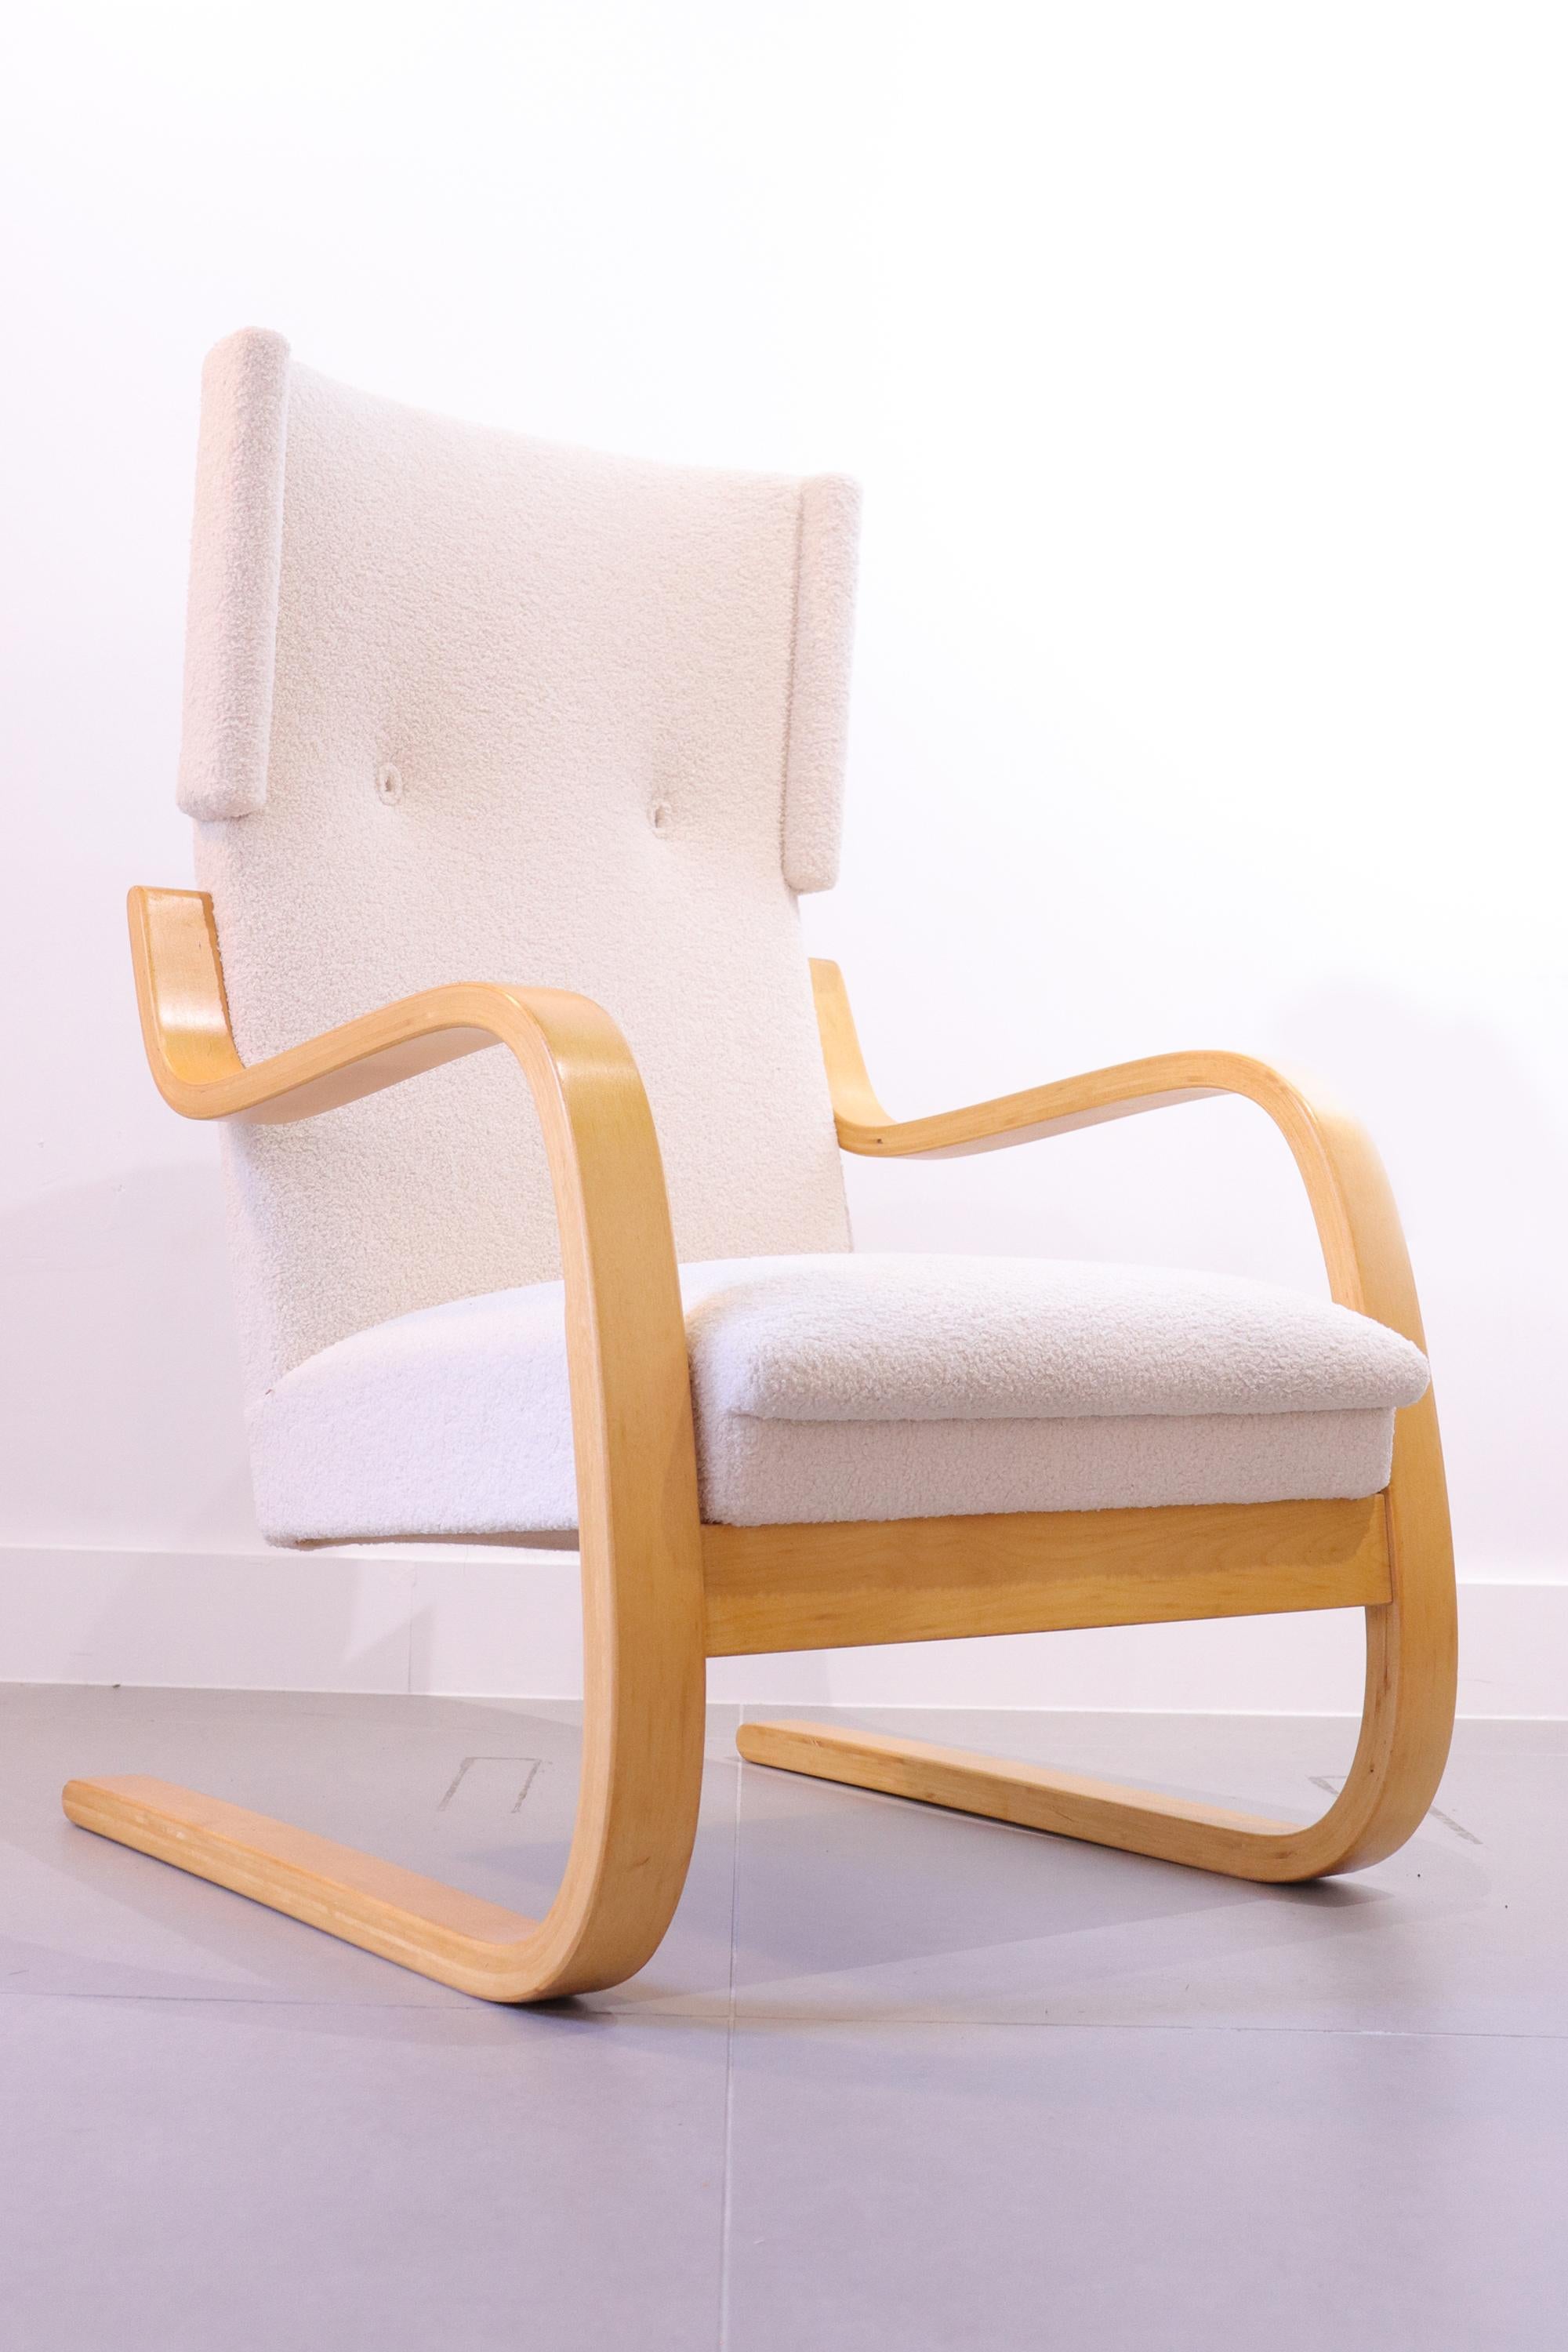 Bouclé Alvar Aalto 401 Wingback Chair by Artek Finland, 1970s For Sale